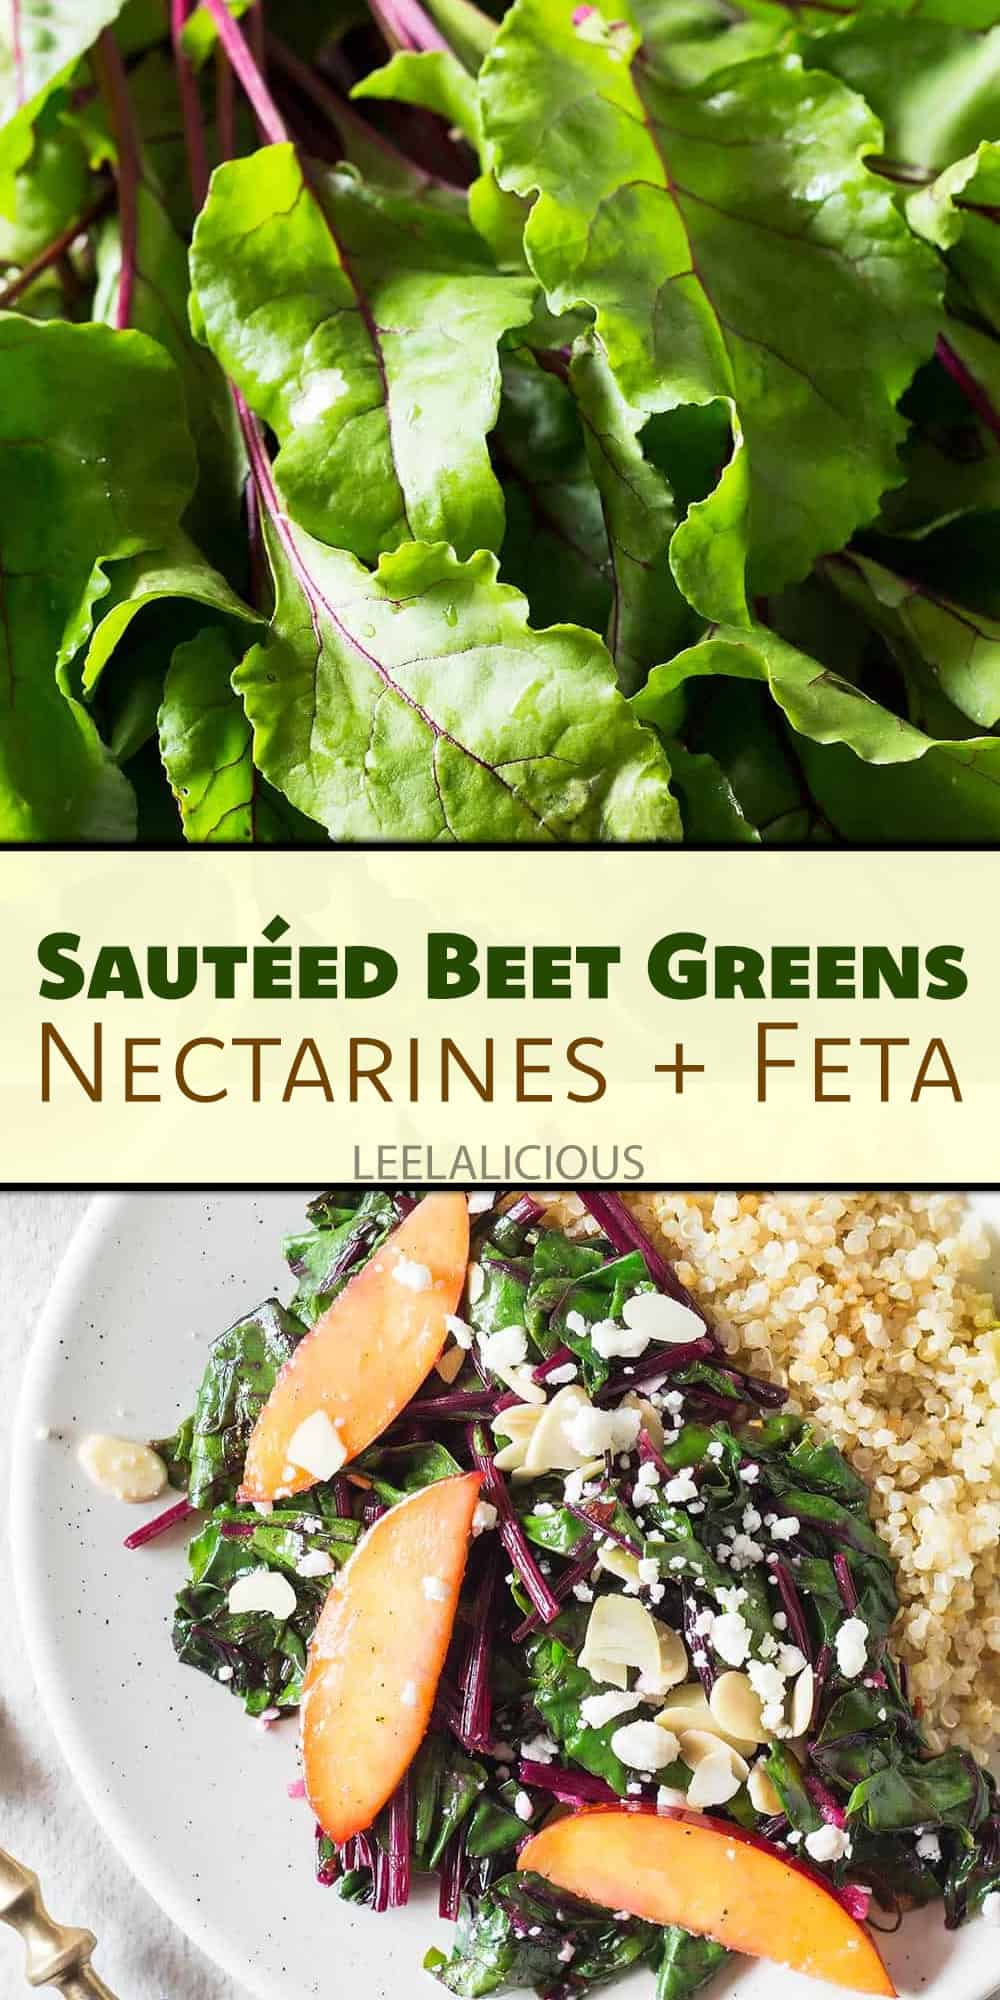 Sautéed Beet Greens with Nectarines + Feta